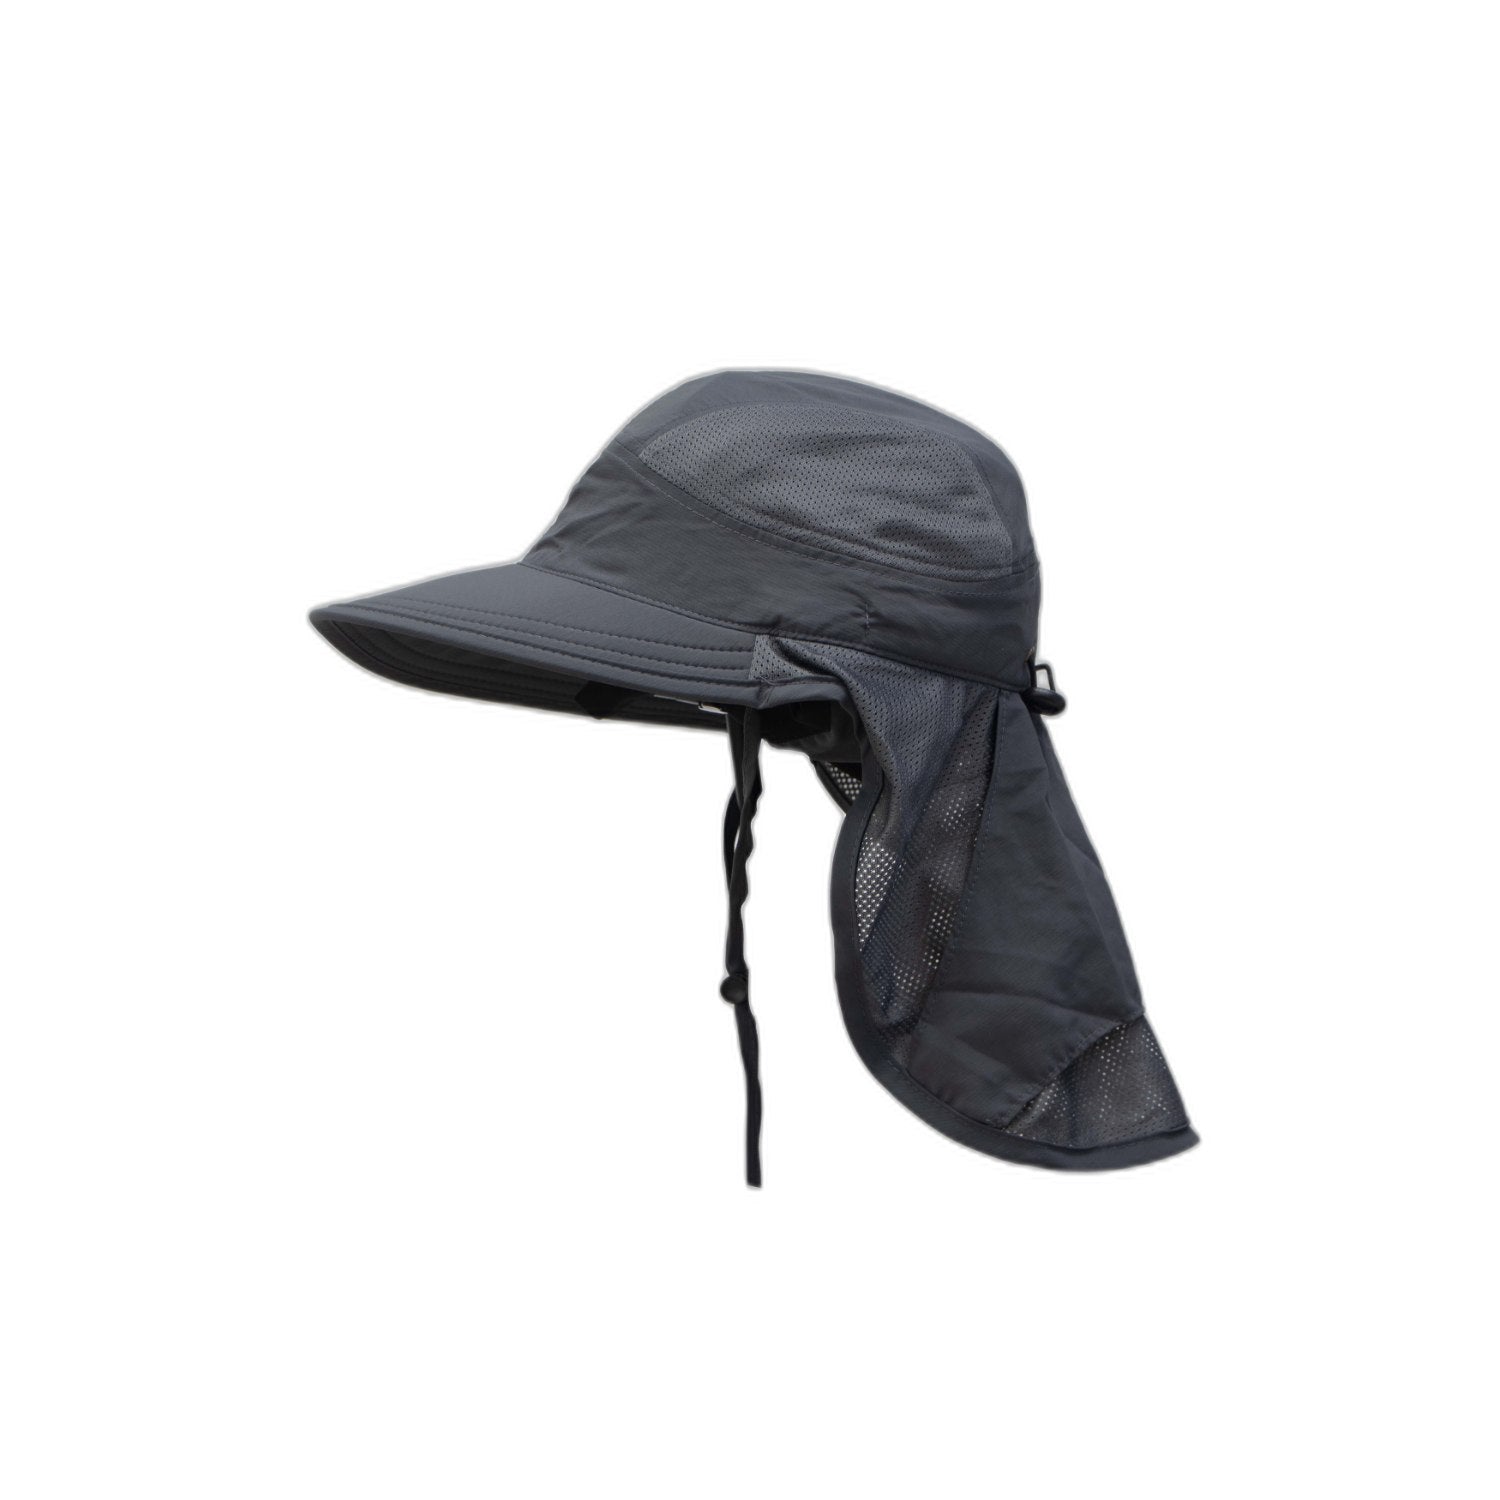 Buy Gokyo Kaza Sun Cap with Neck Cover Dark Grey | Hats at Gokyo Outdoor Clothing & Gear